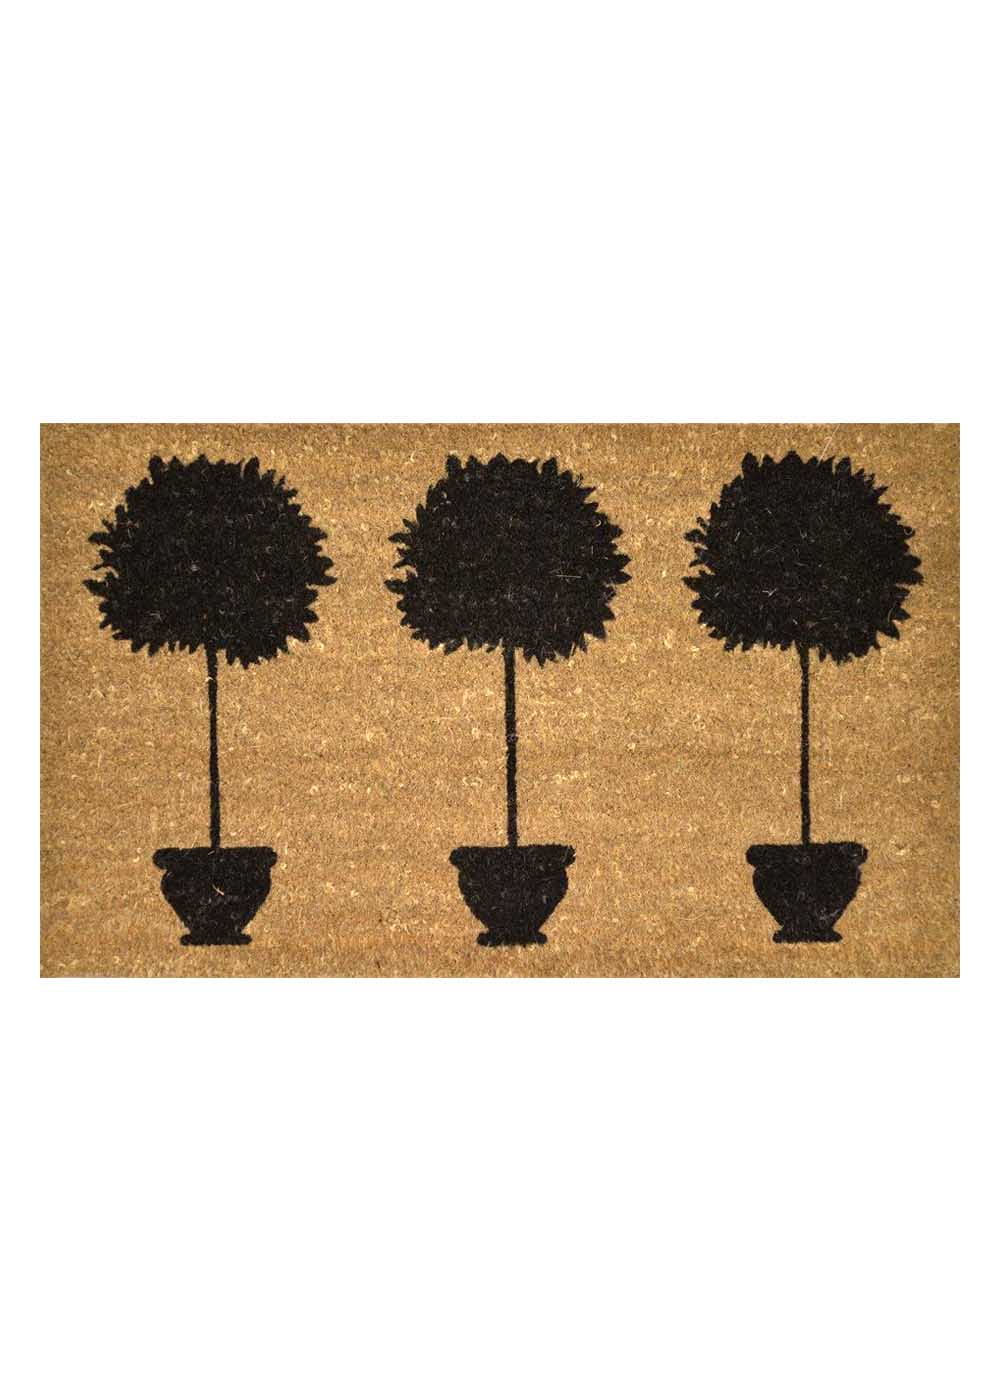 PVC Backed Coir Doormat - Black Topiary Trees